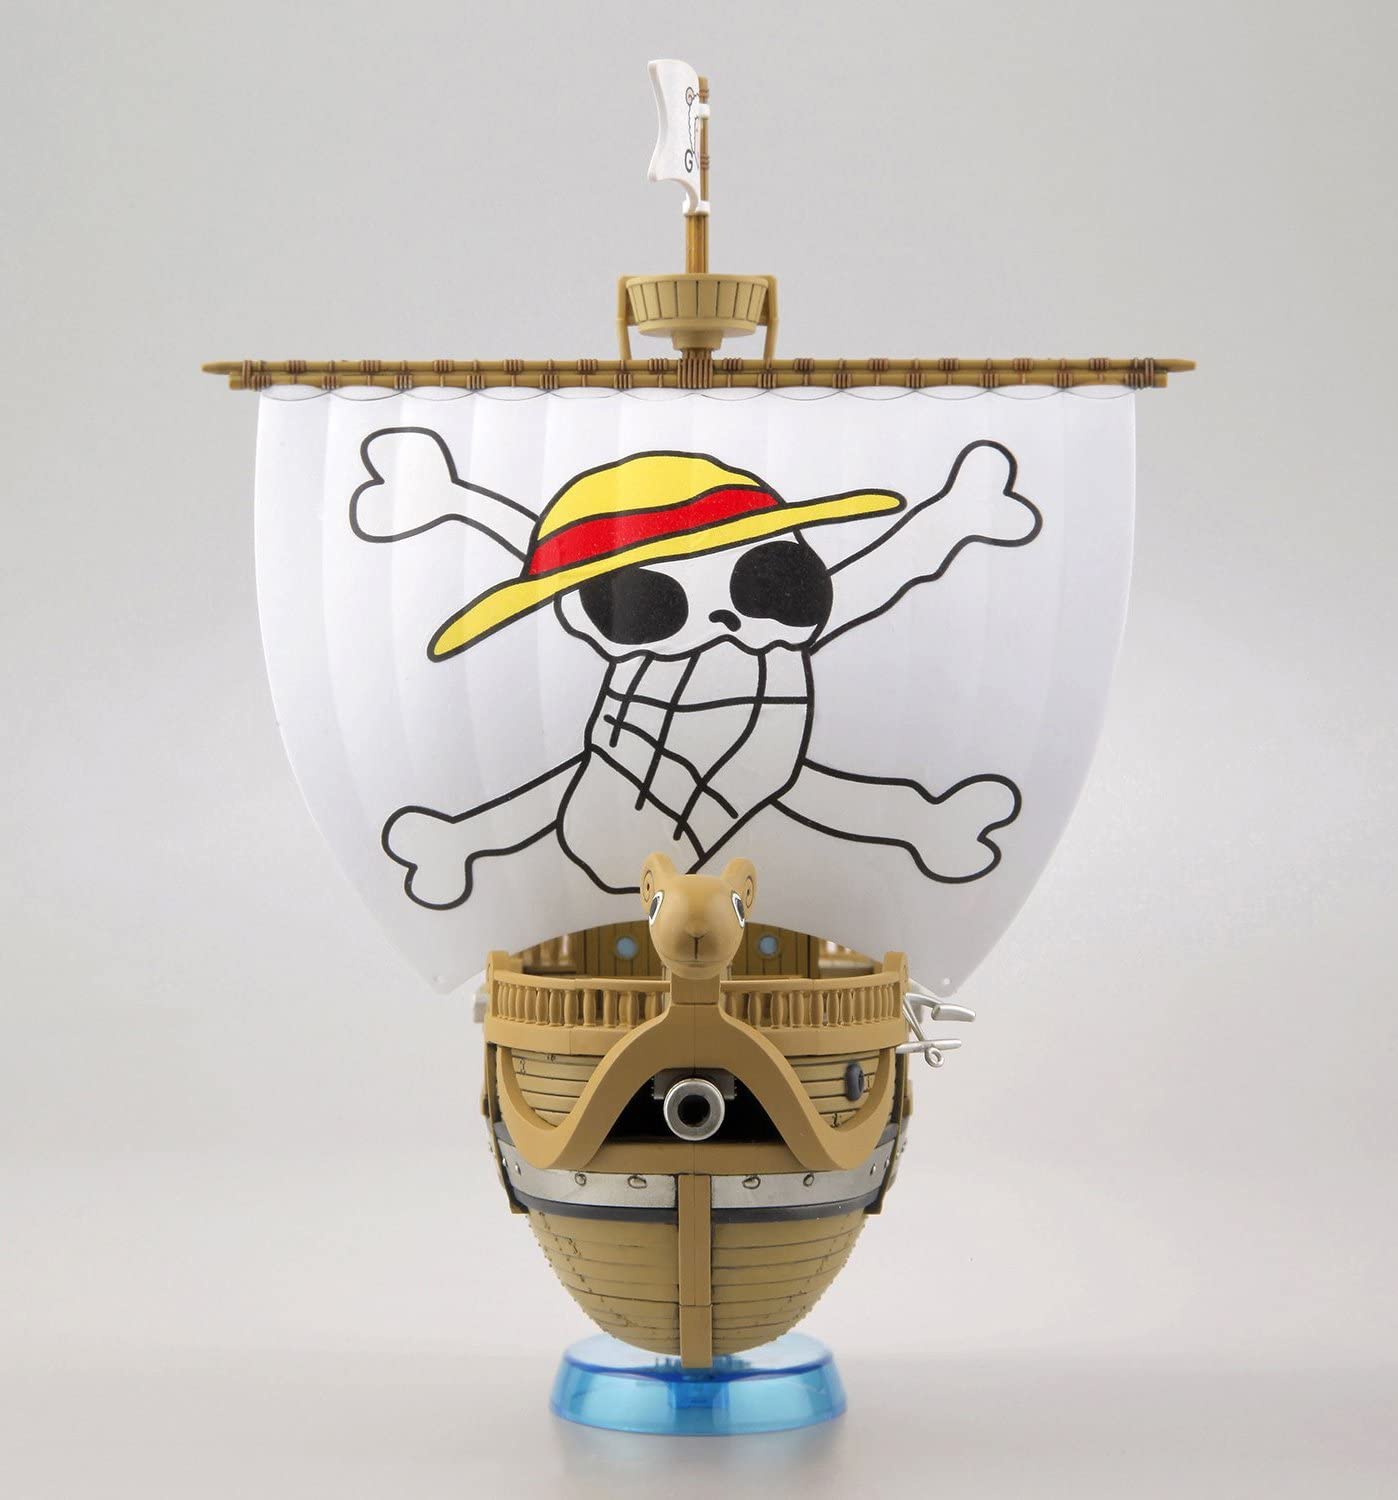 One Piece - Grand Ship Collection - Going-Merry Memorial Color Ver.